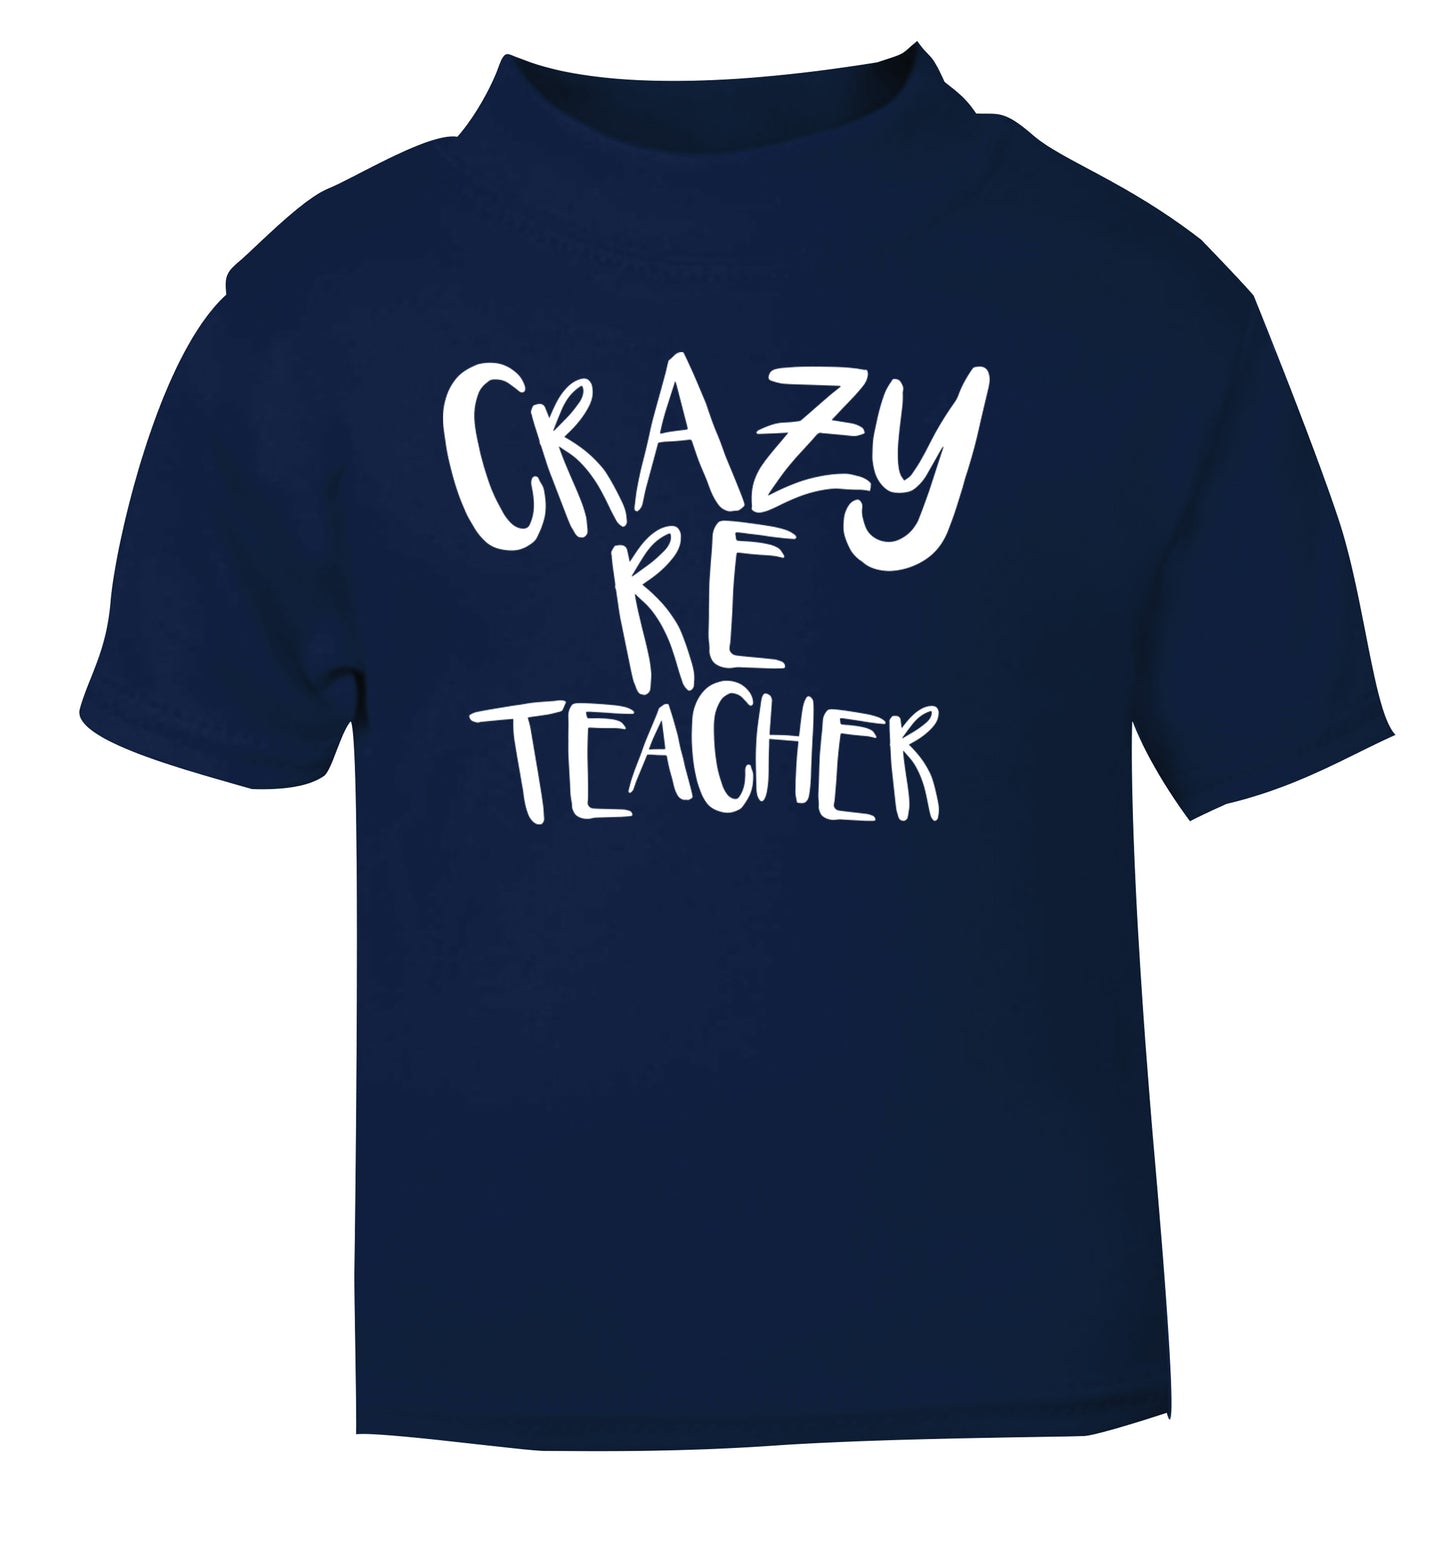 Crazy RE teacher navy Baby Toddler Tshirt 2 Years